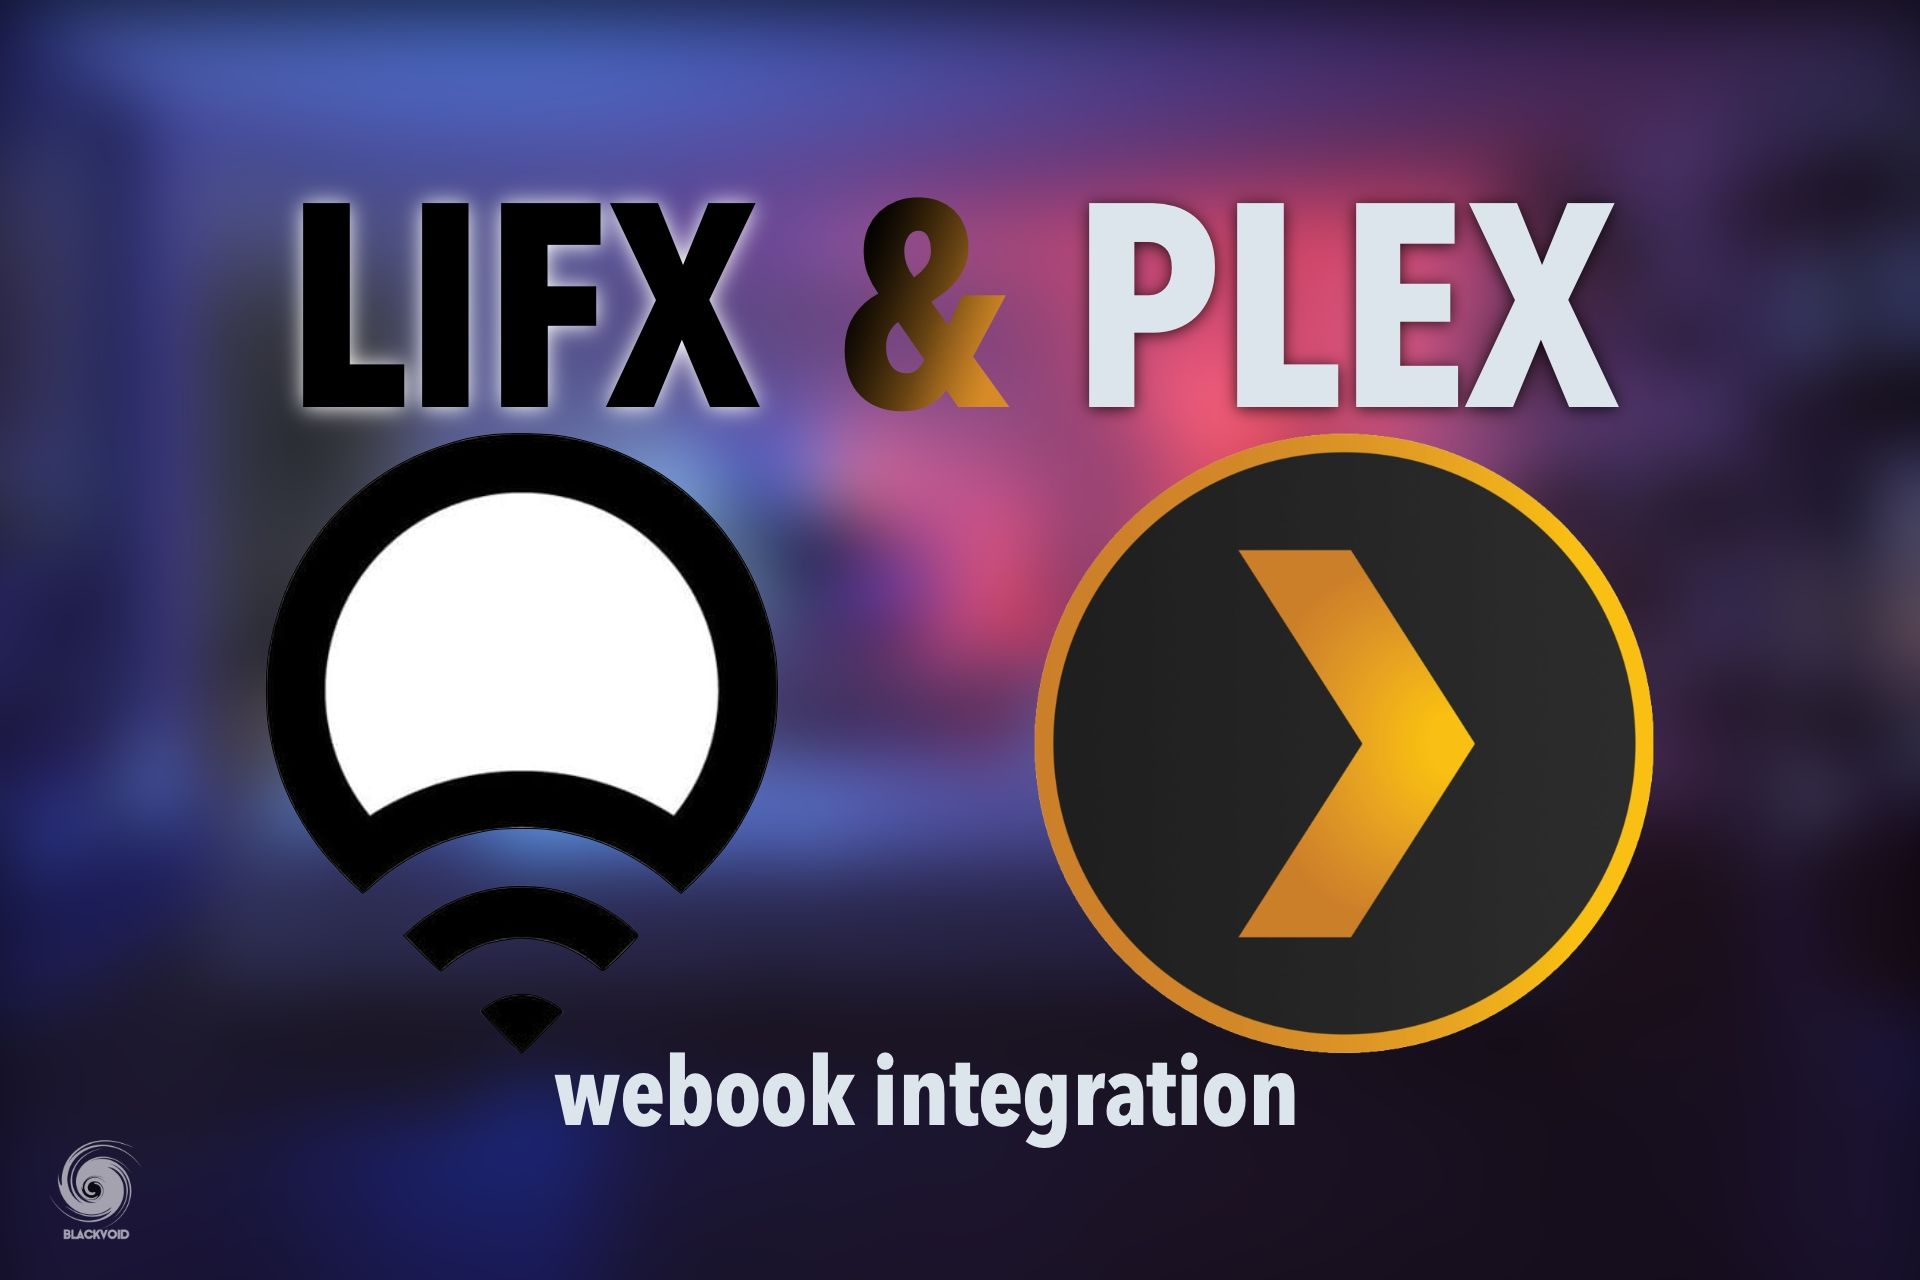 LIFX & PLEX webook integration via Docker